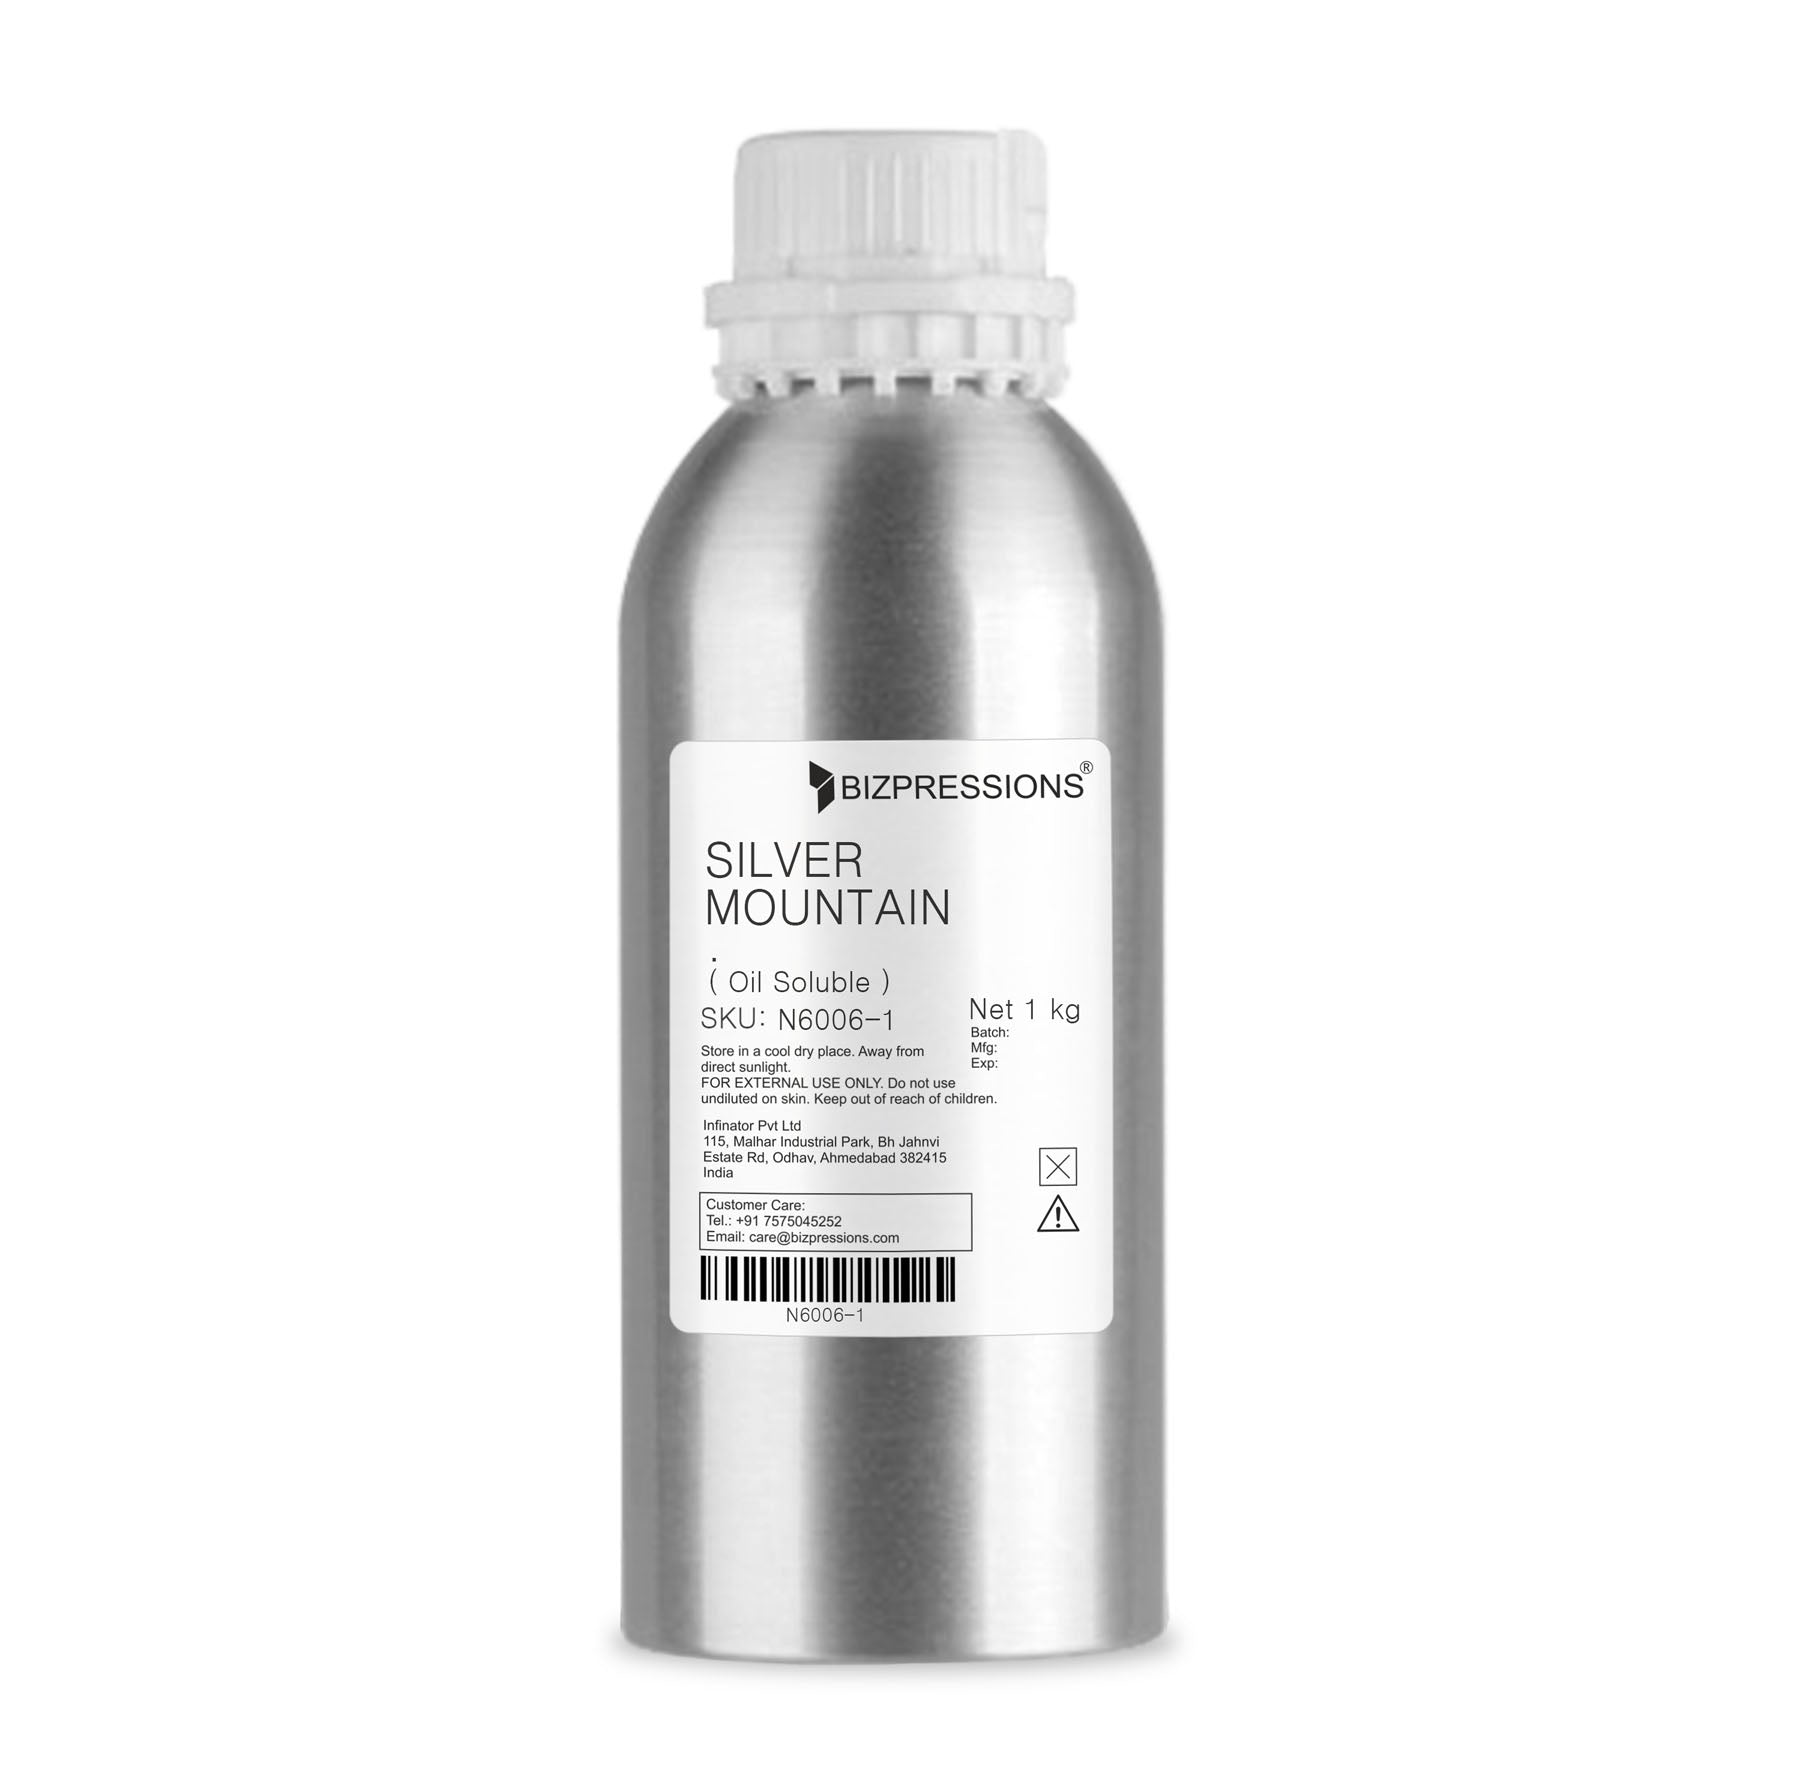 SILVER MOUNTAIN - Fragrance ( Oil Soluble ) - 1 kg